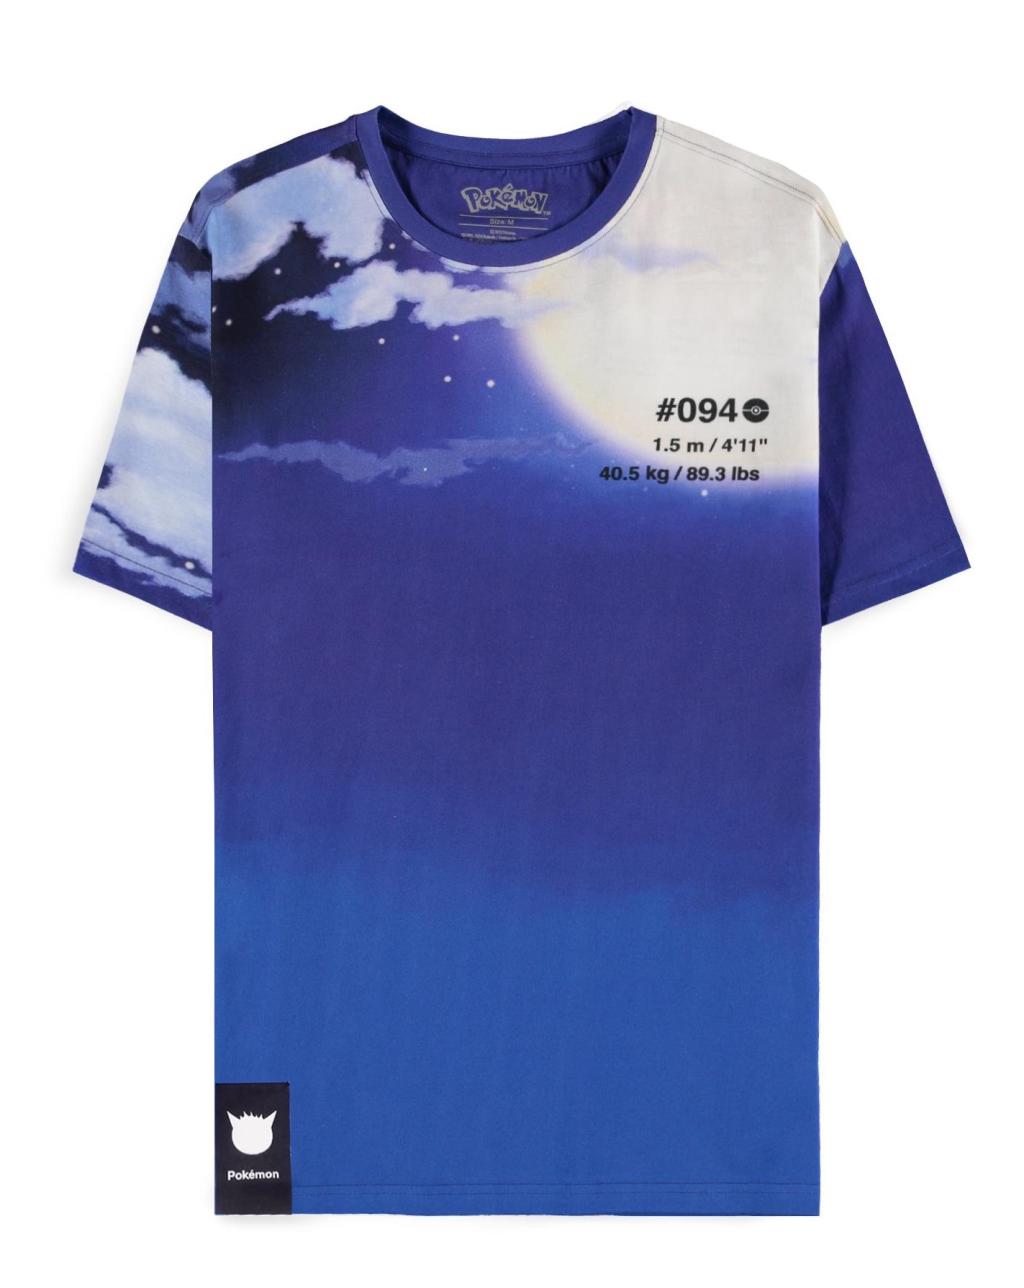 POKEMON - Gengar - Men's T-shirt (M)